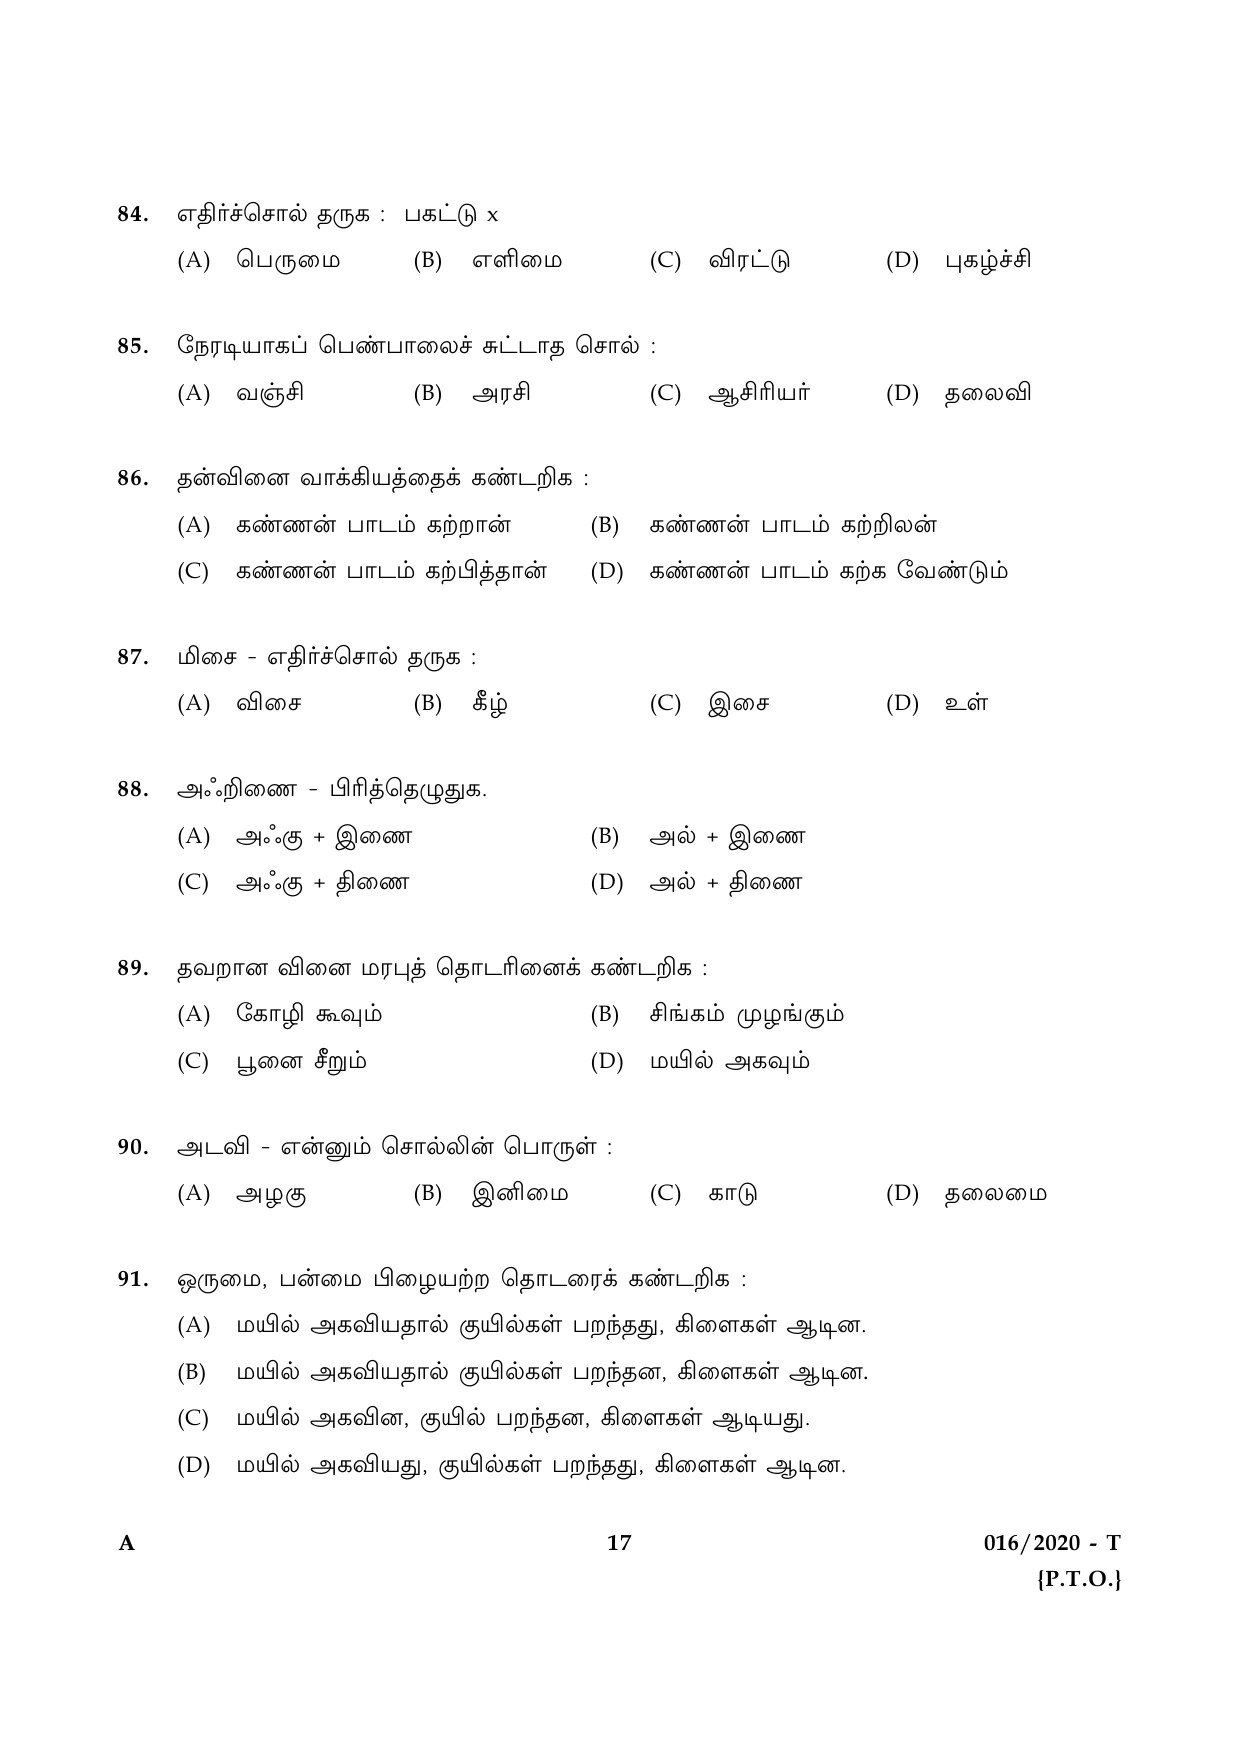 KAS Officer Trainee Tamil Exam 2020 Code 0162020 16